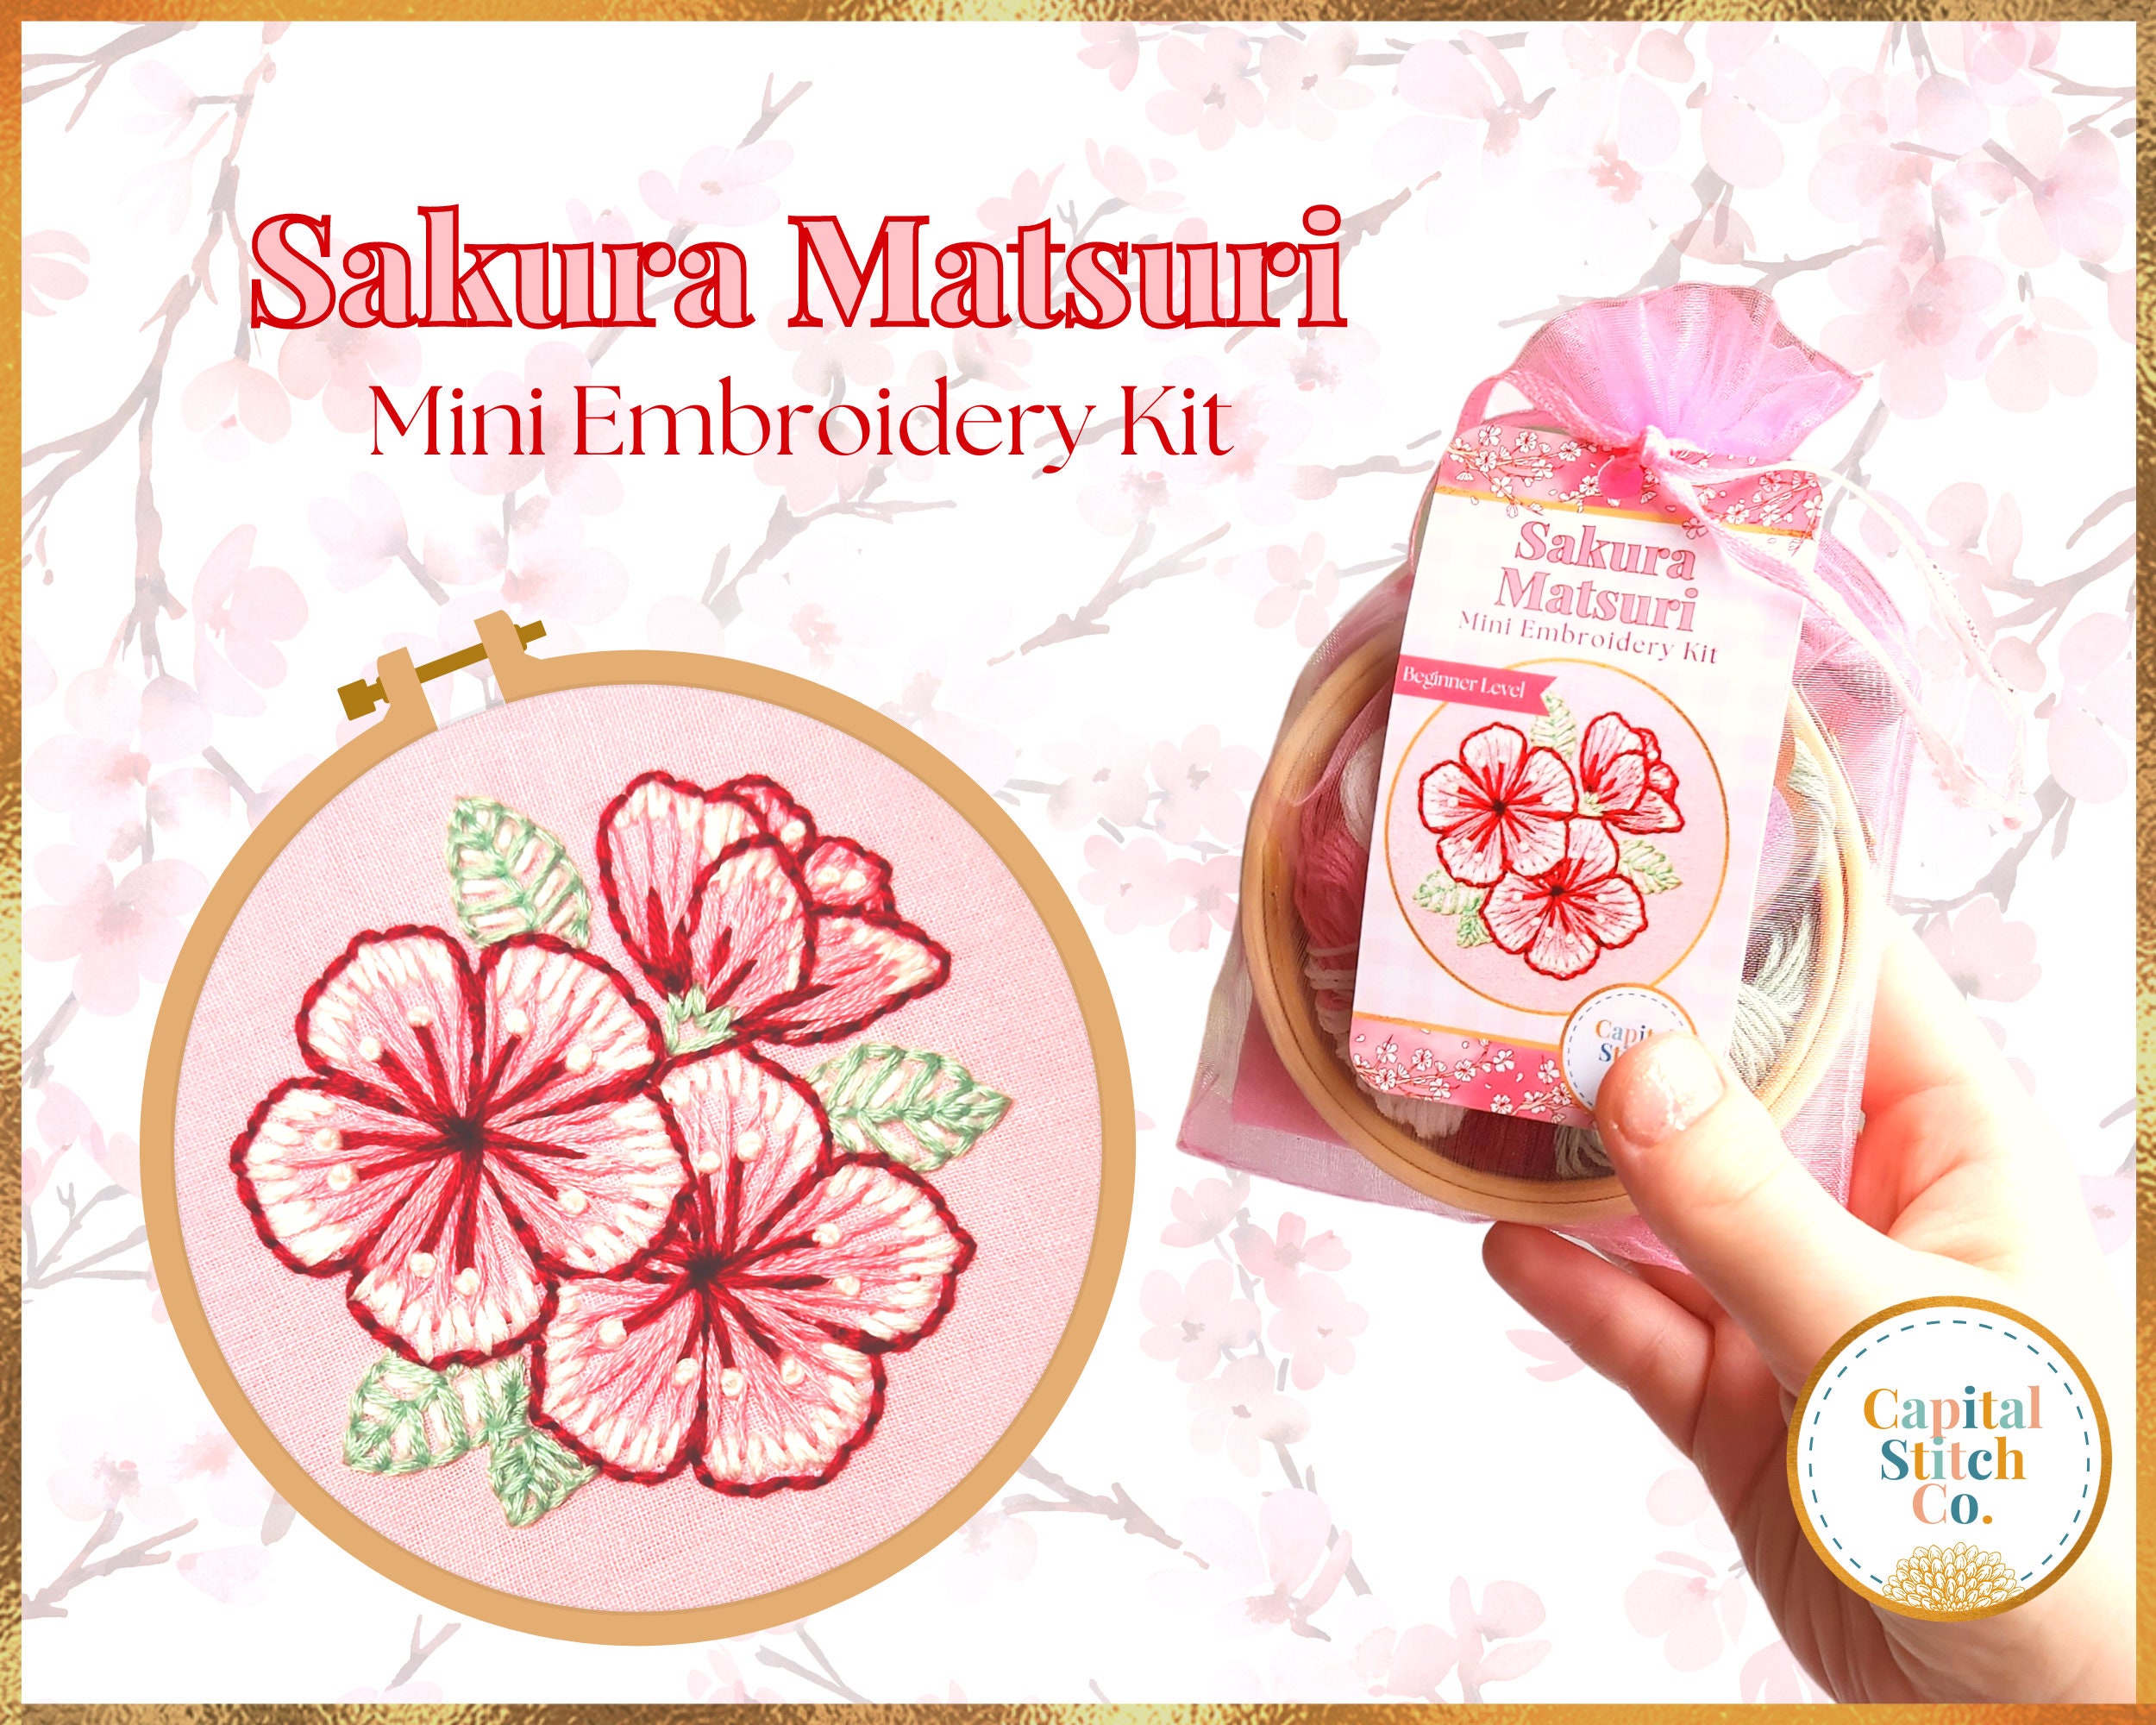 Sakura Matsuri cherry blossom hanami DIY mini embroidery kit with tutorial  guide do it yourself handmade ornament love cute gifts for her